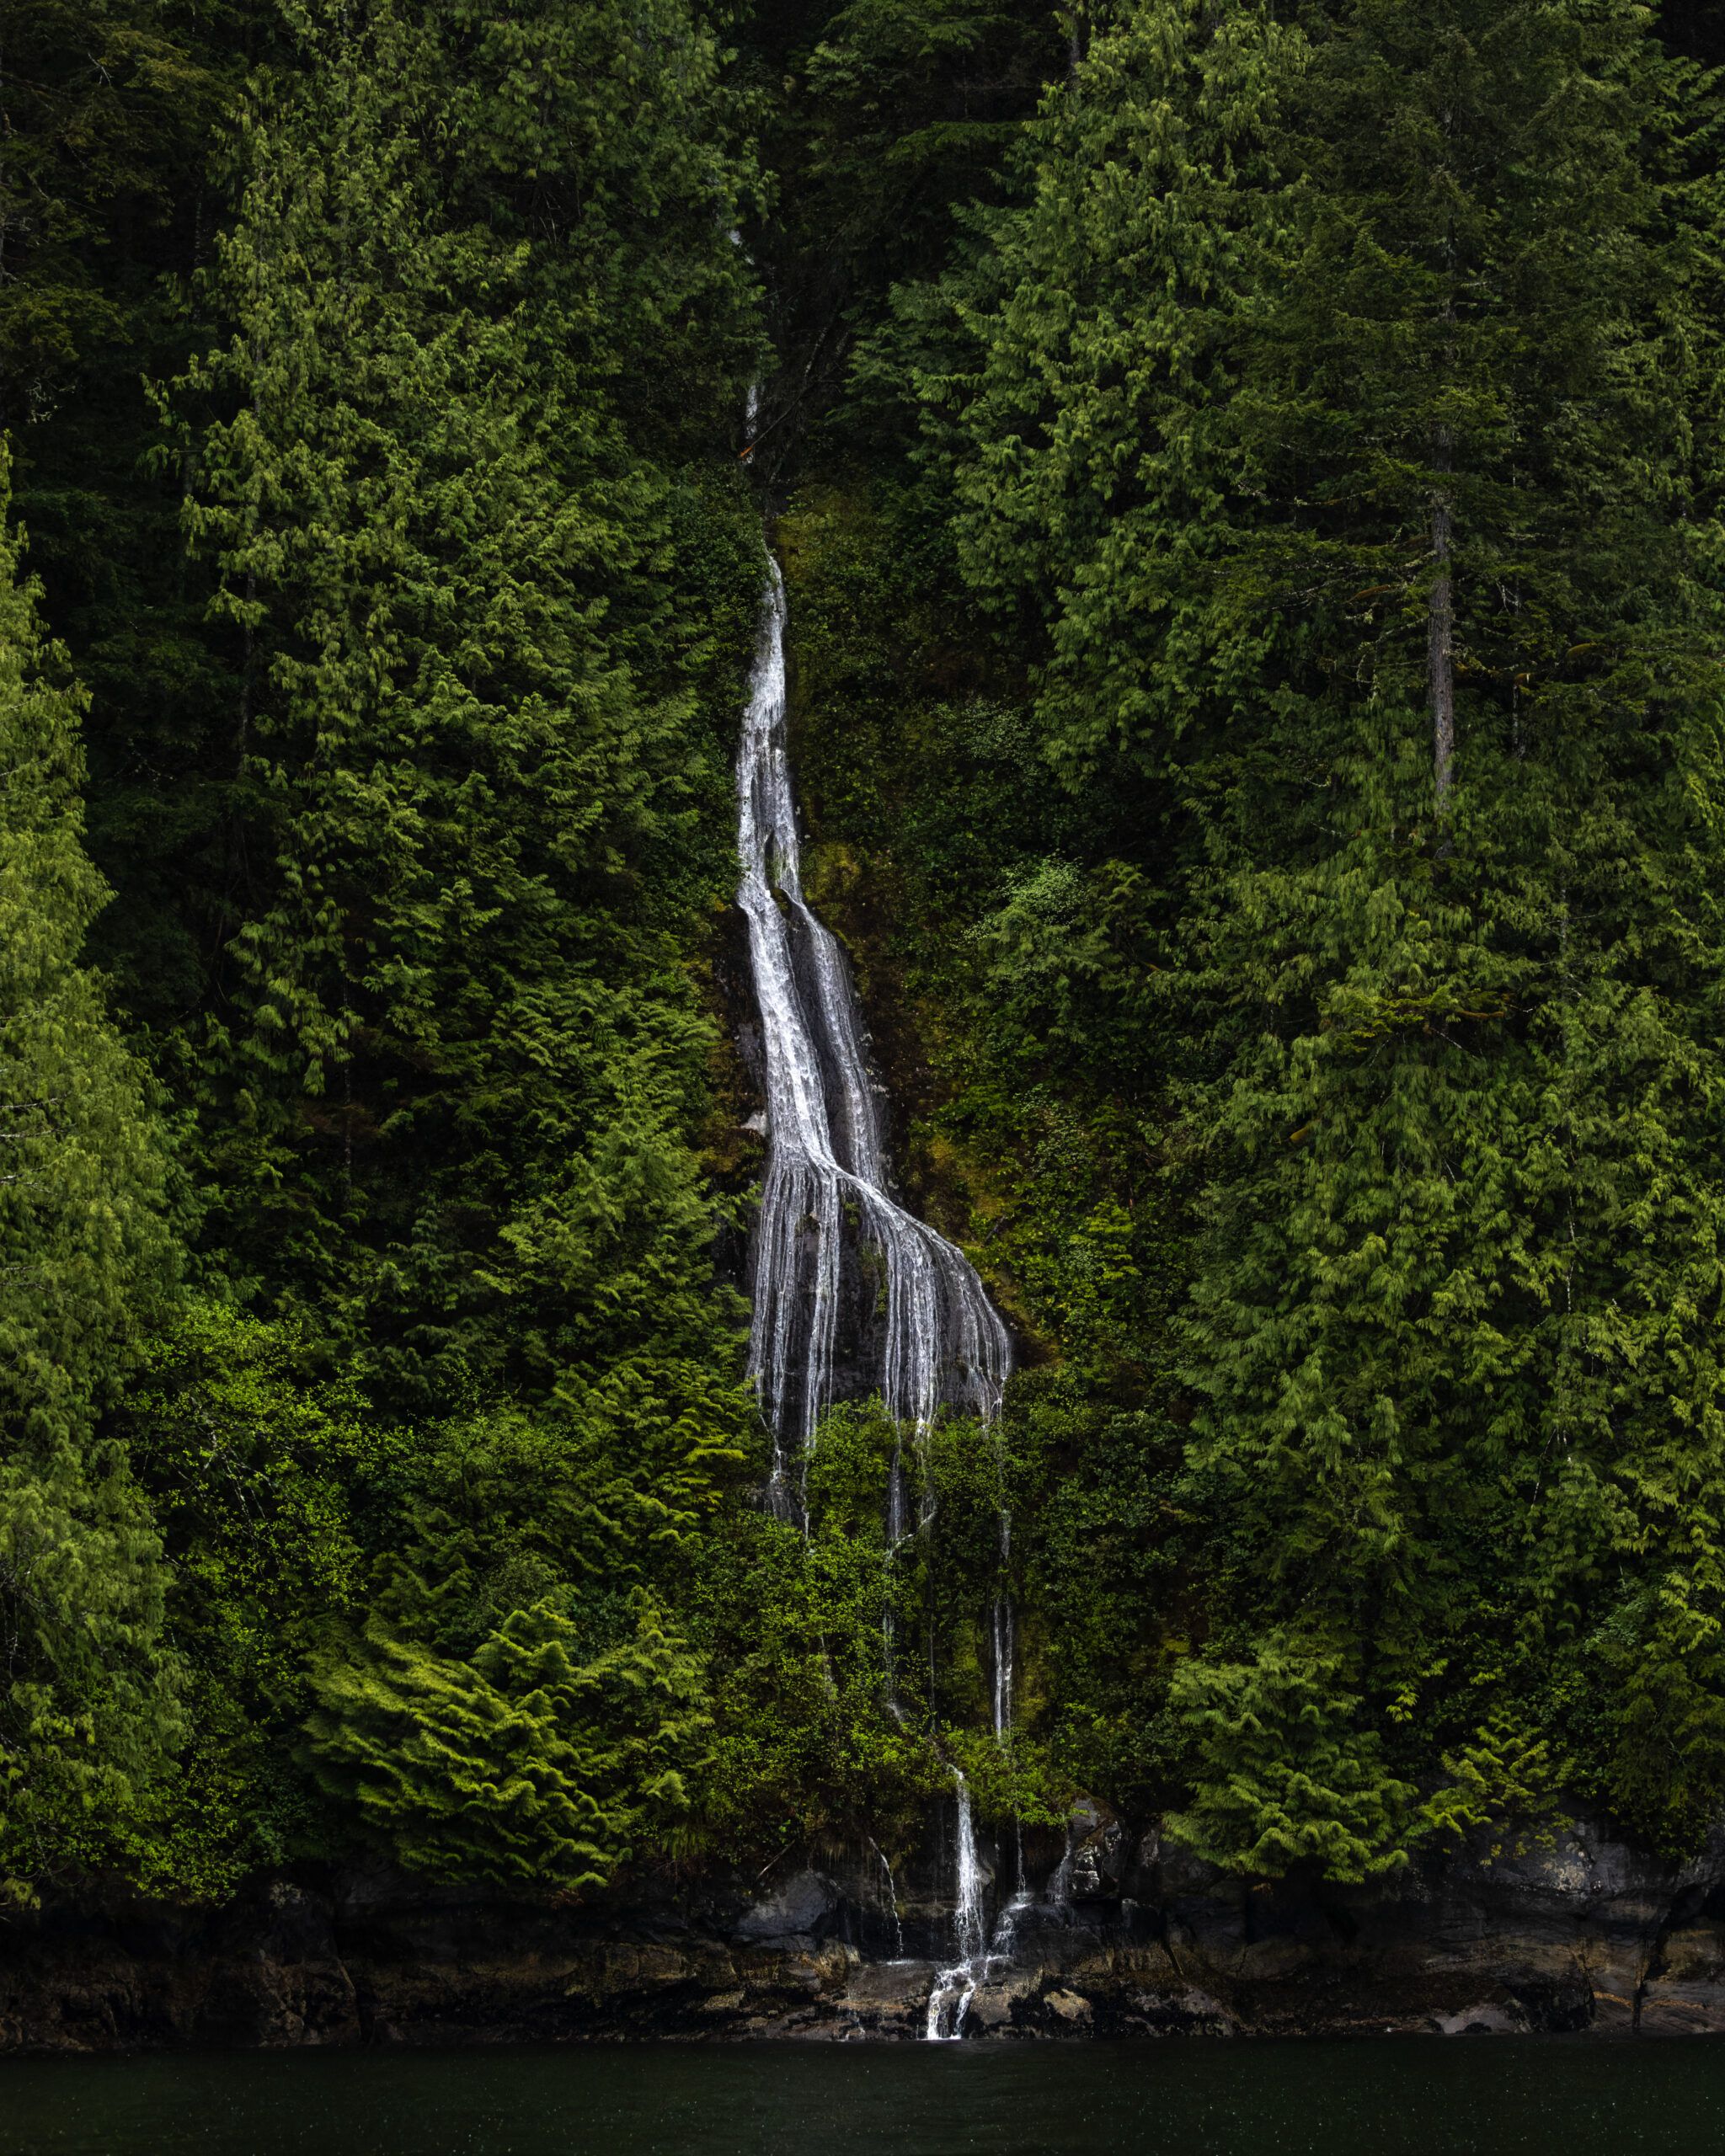 skinny waterfall flowing among trees